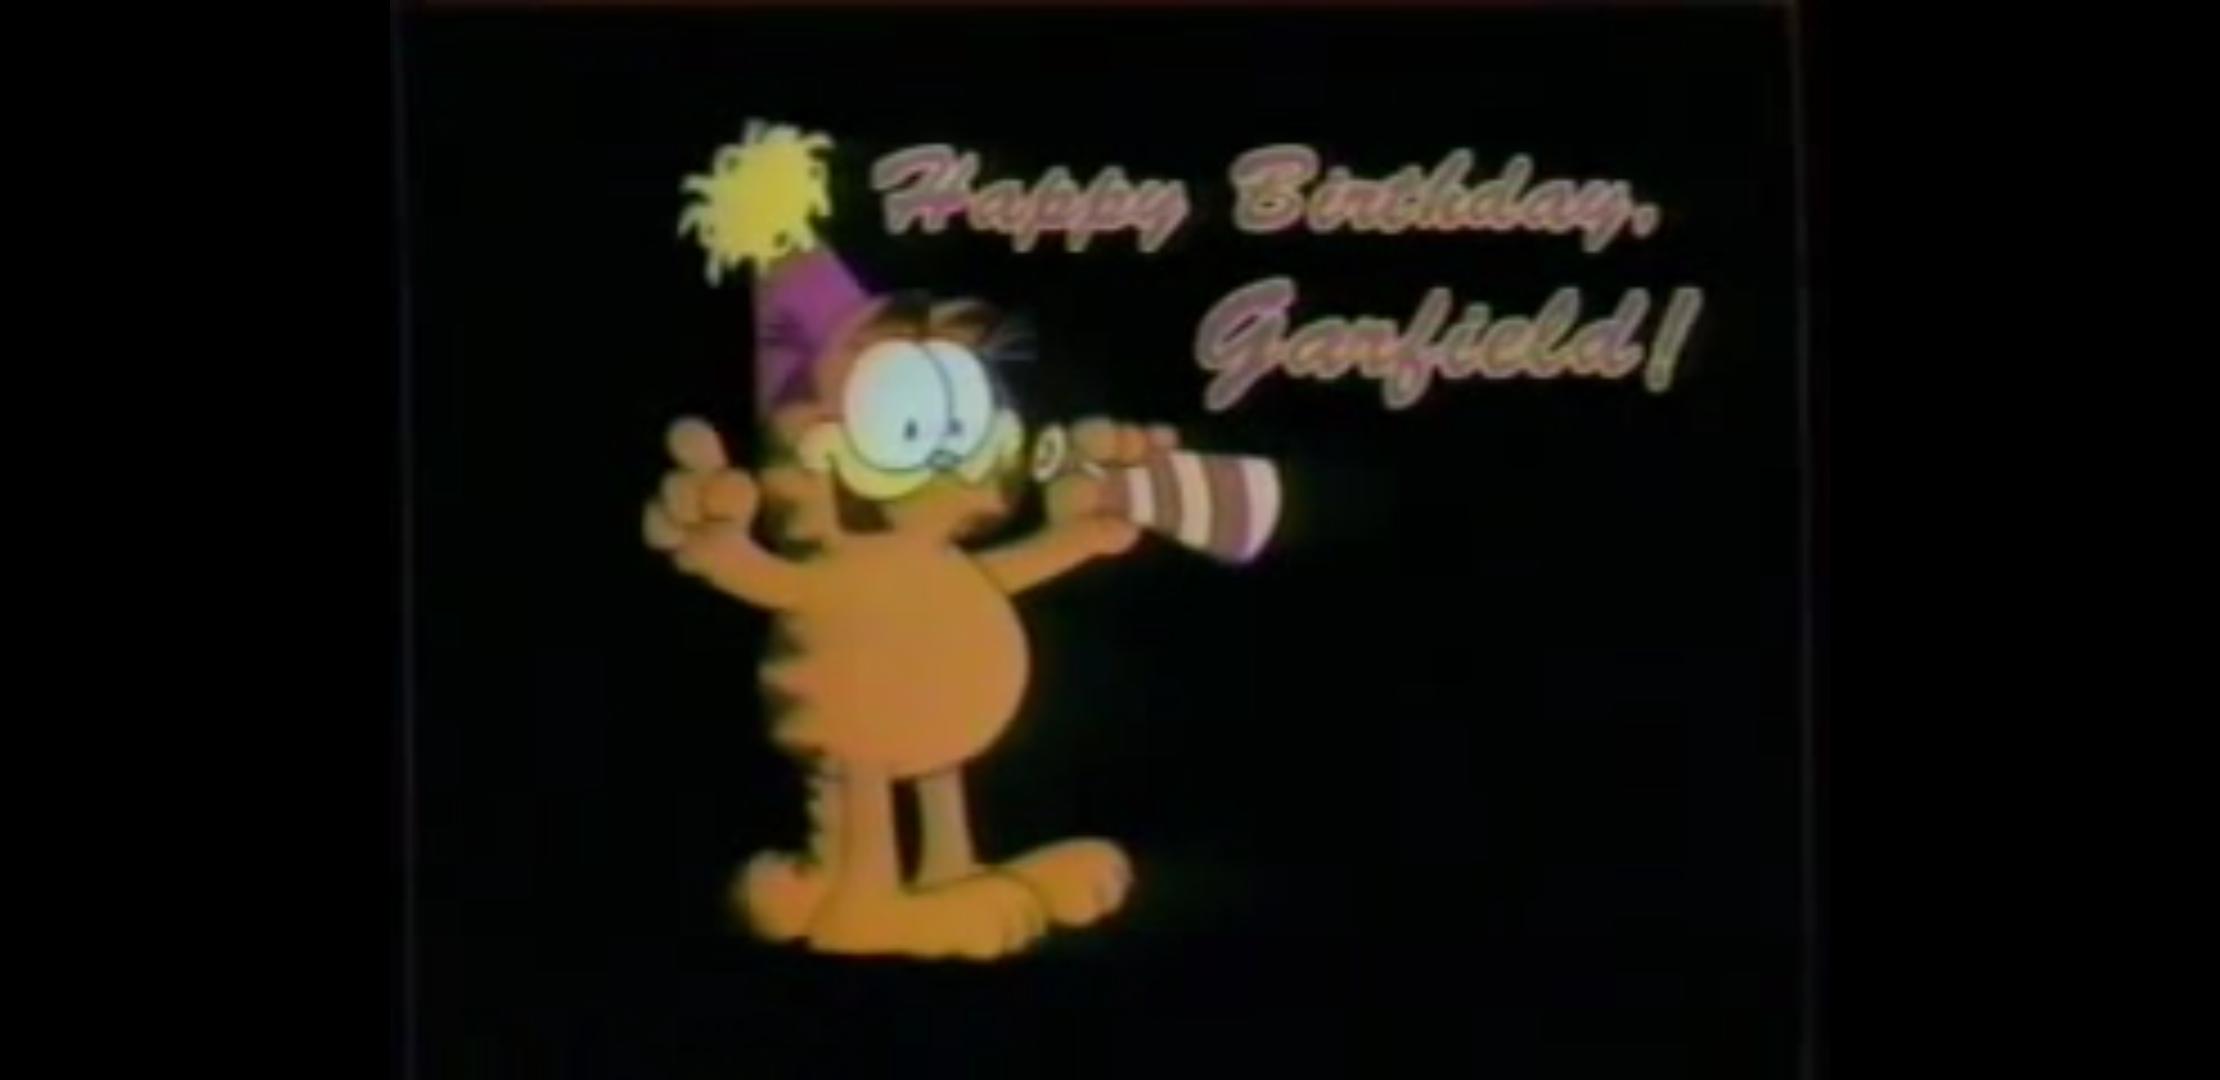 Happy Birthday, Garfield